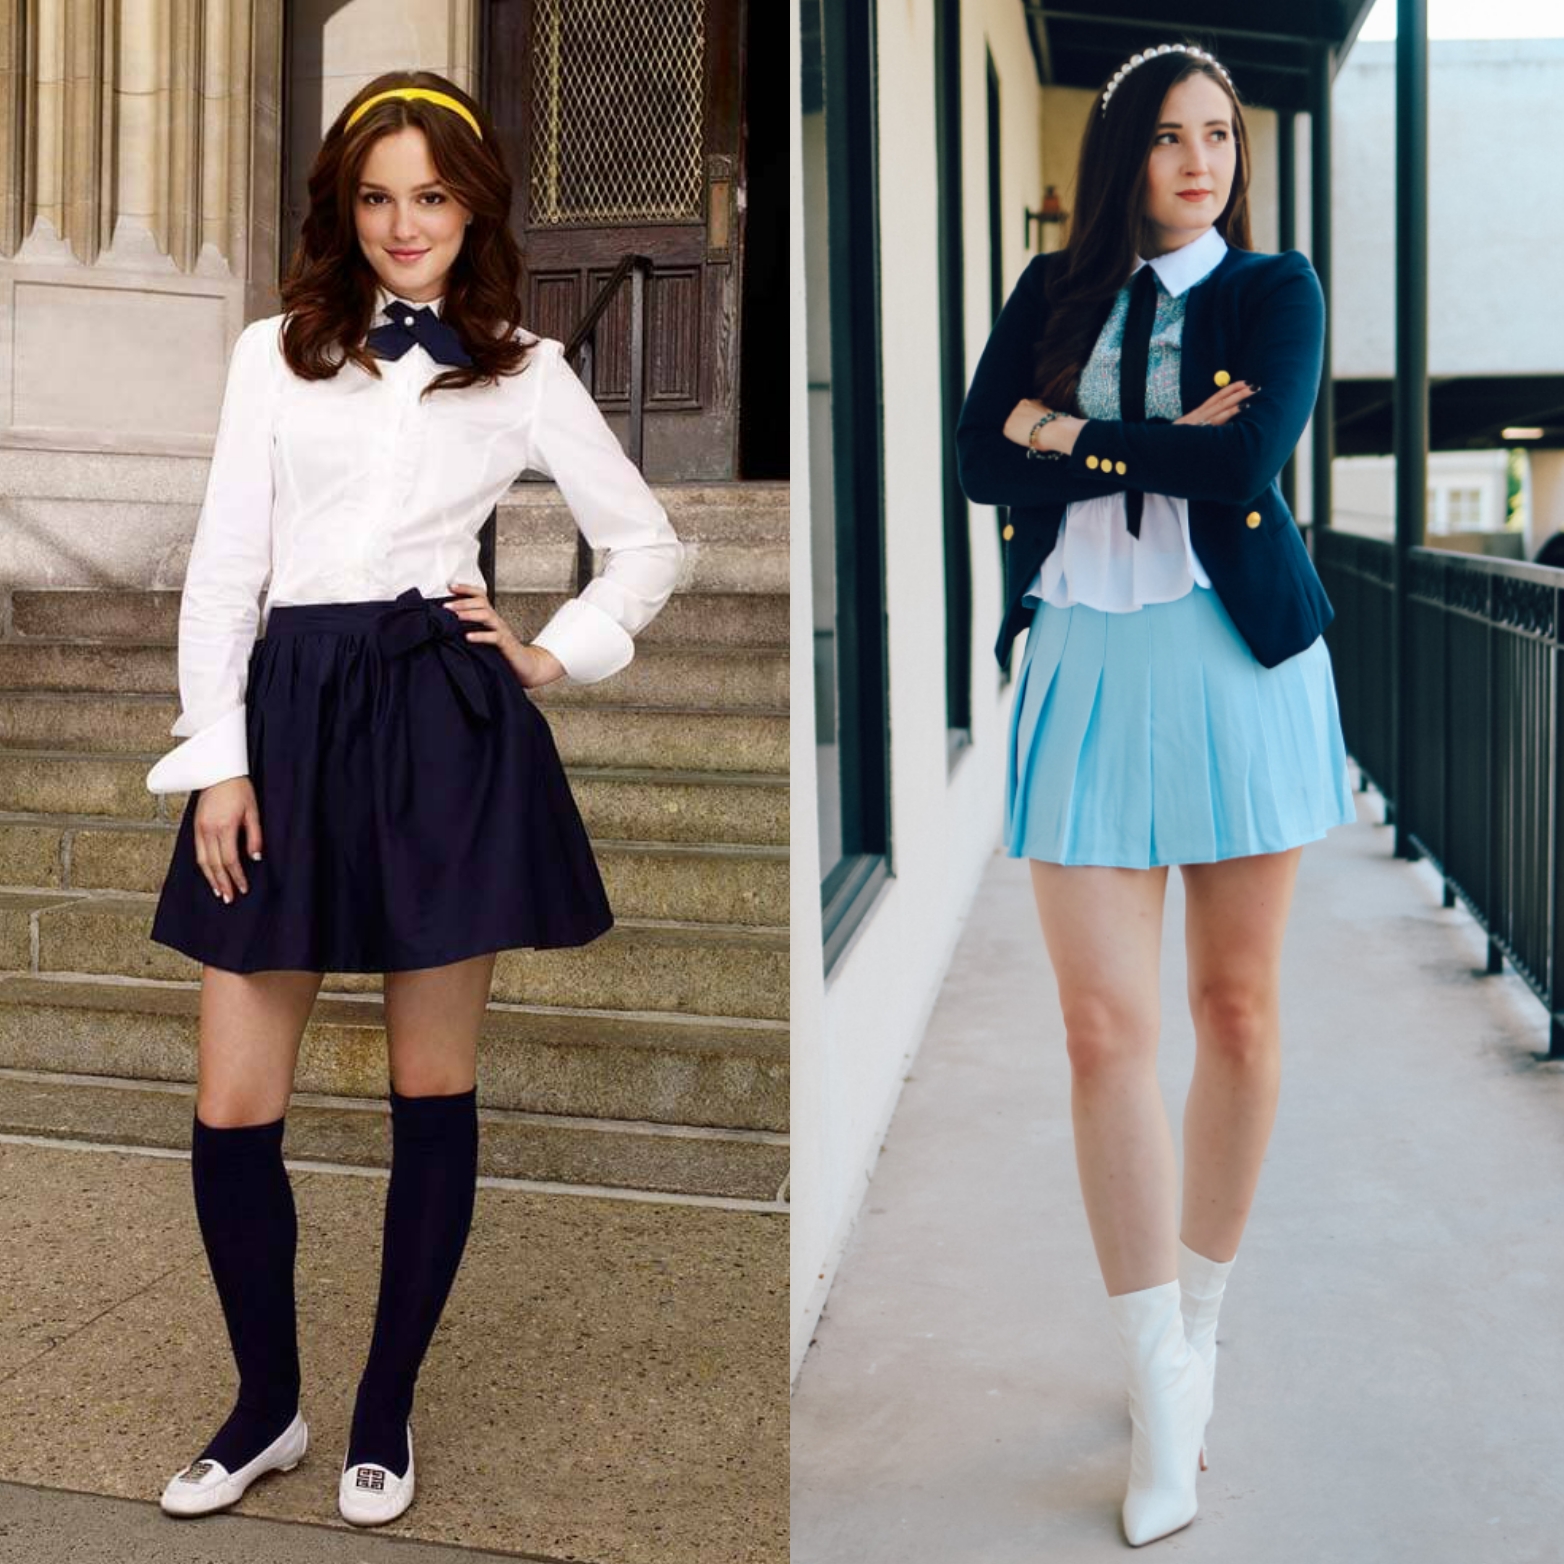 5 Day Style Challenge: How To Dress Like Gossip Girl Blair Waldorf -  Red-rhinestone